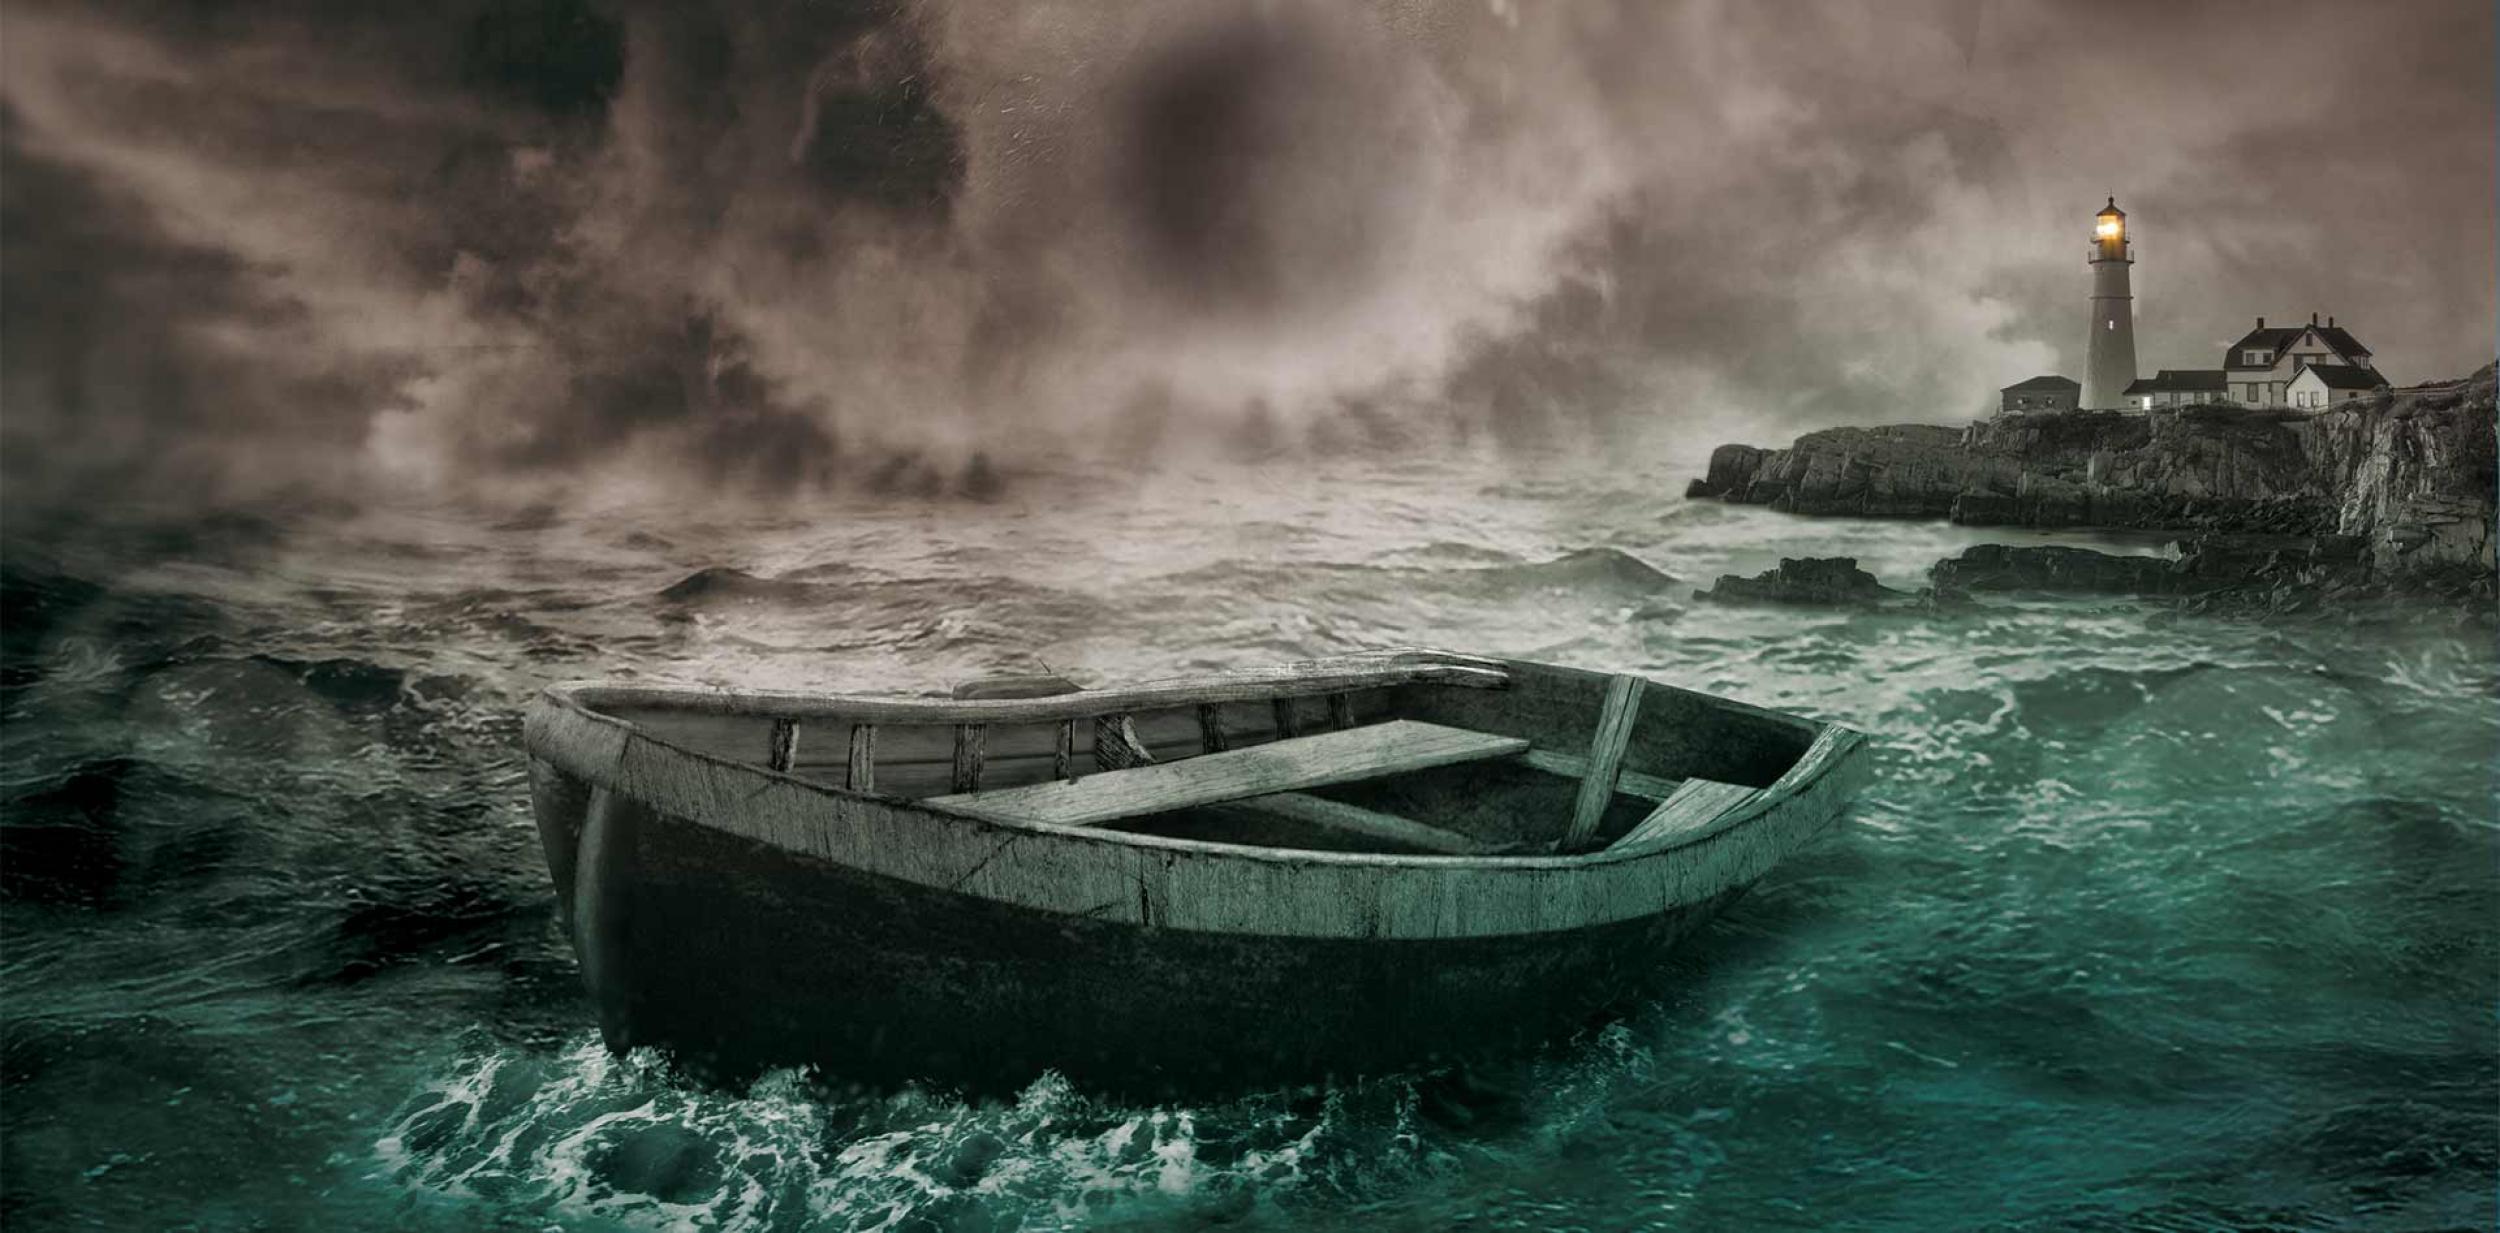 Boat in a thunderous sea